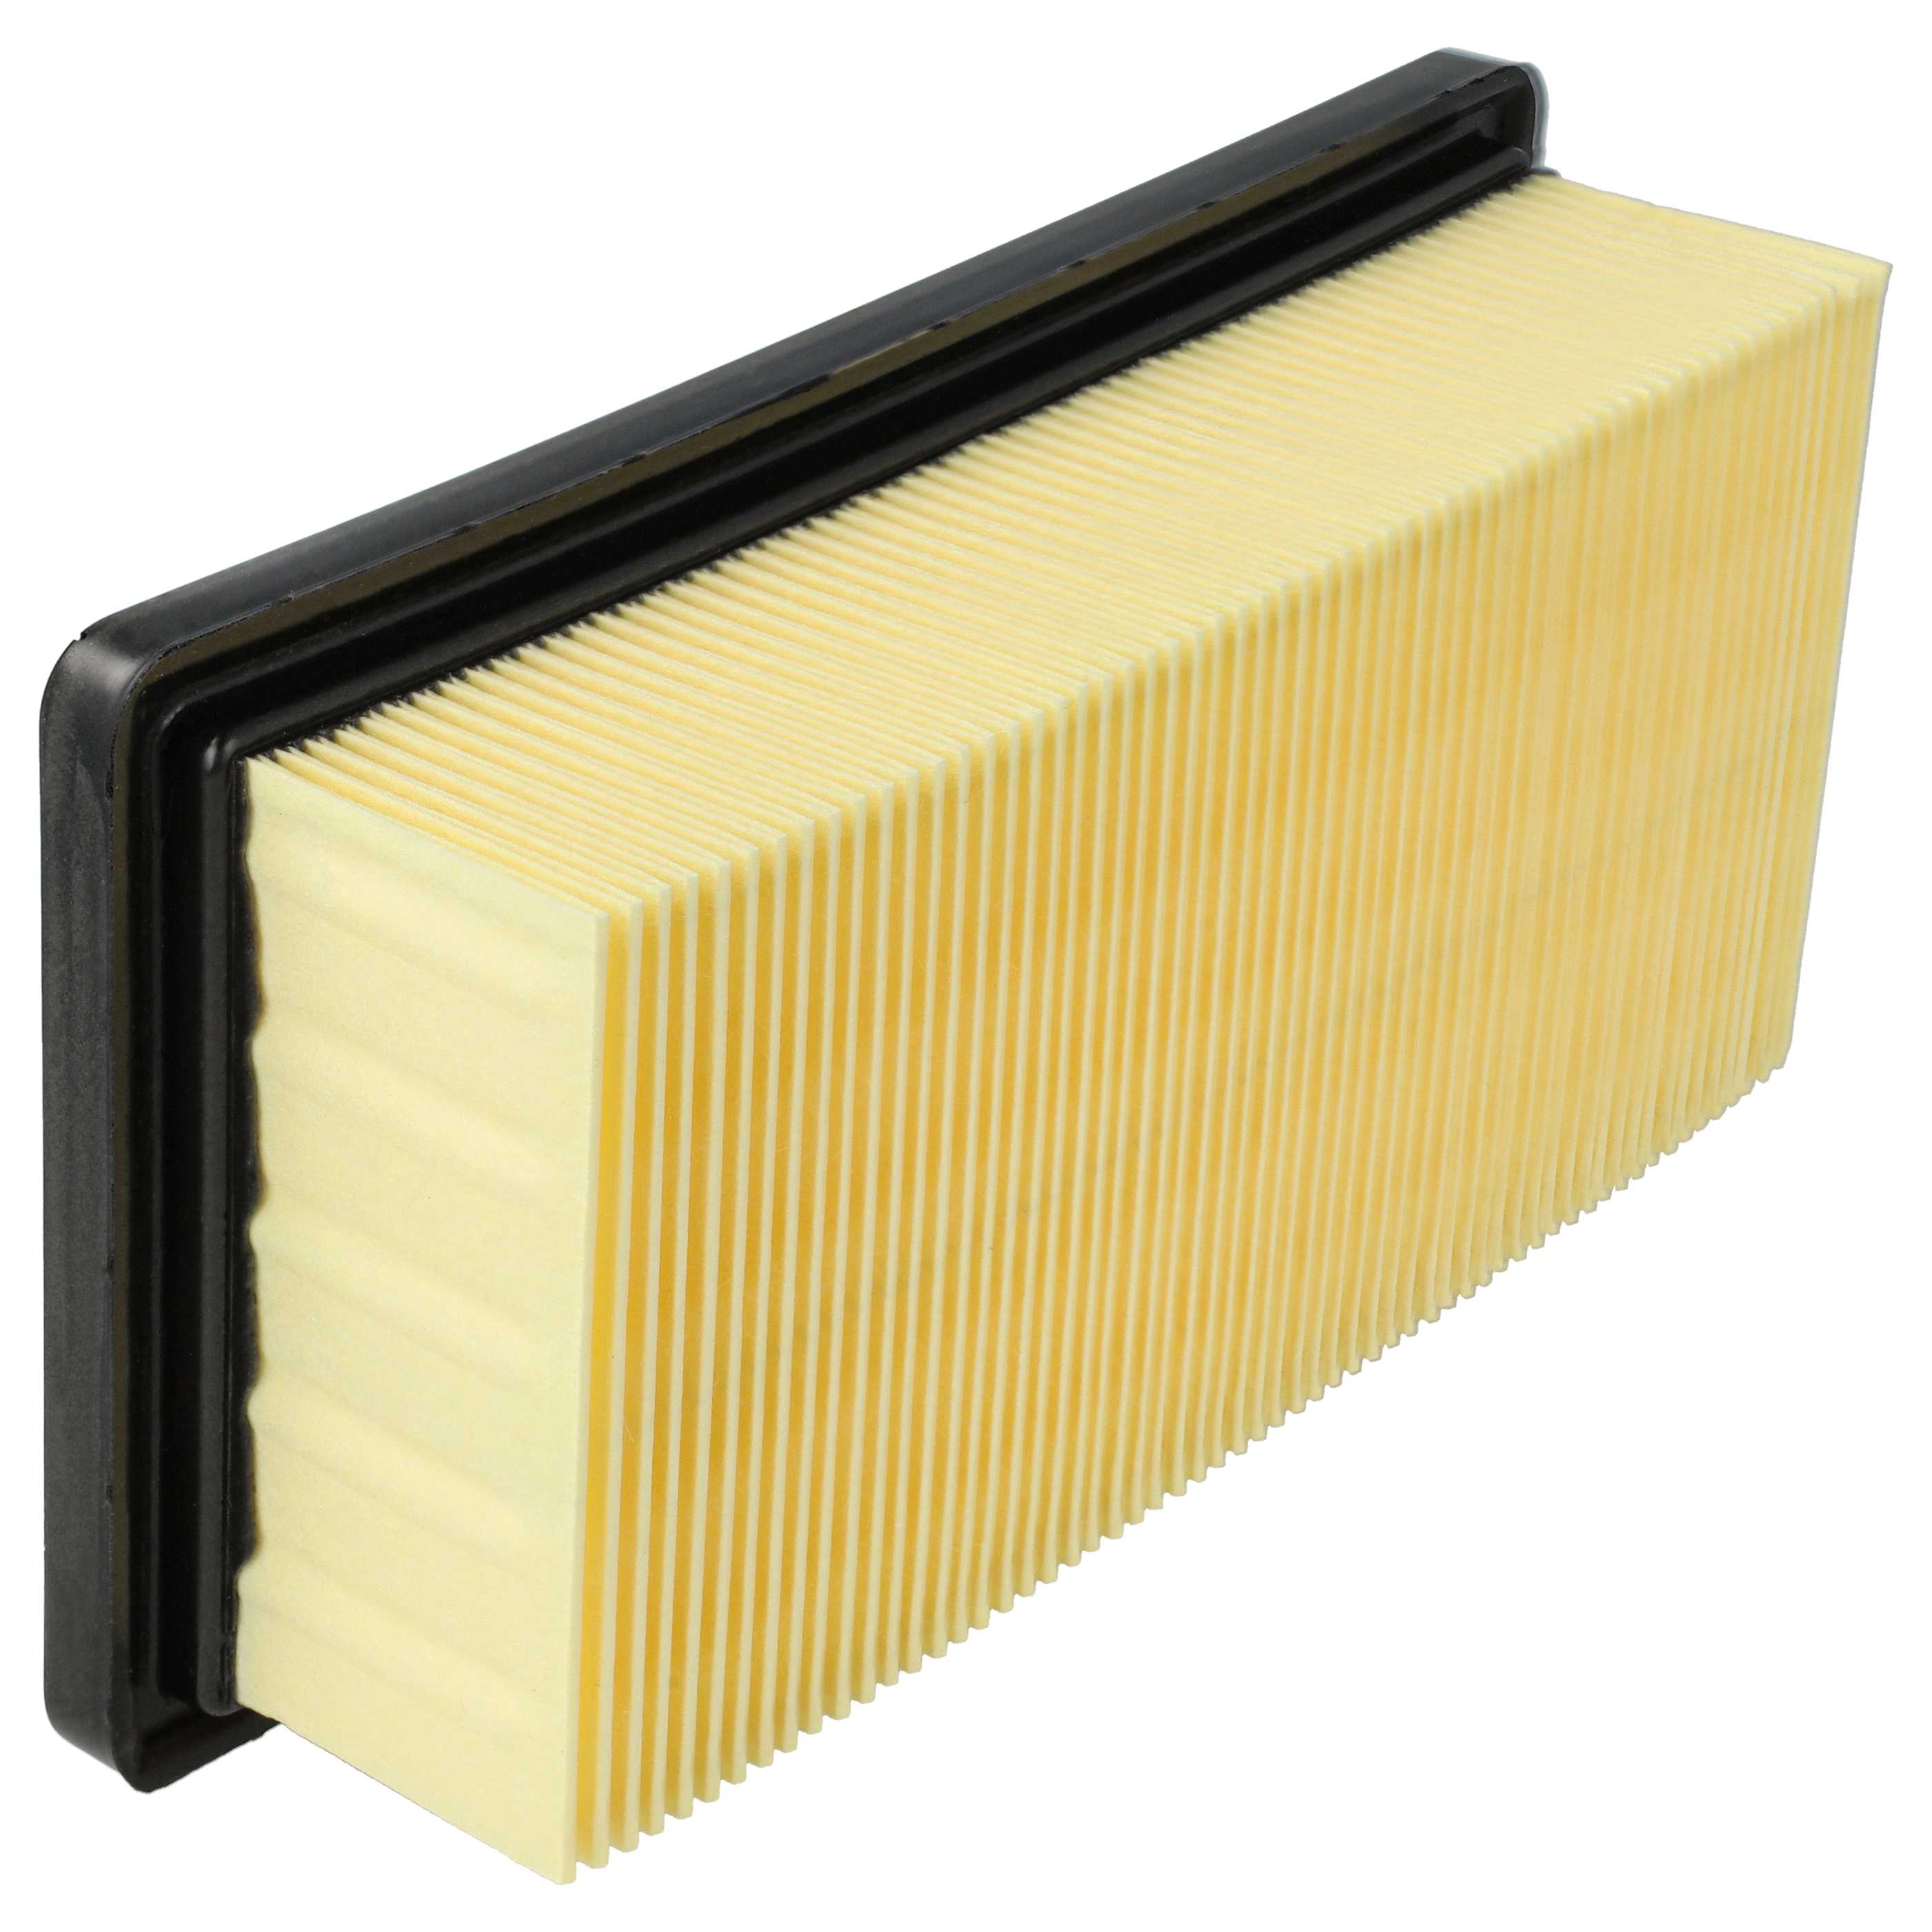 3x Filtro reemplaza Kärcher 6.414-971.0 para aspiradora filtro plisado plano